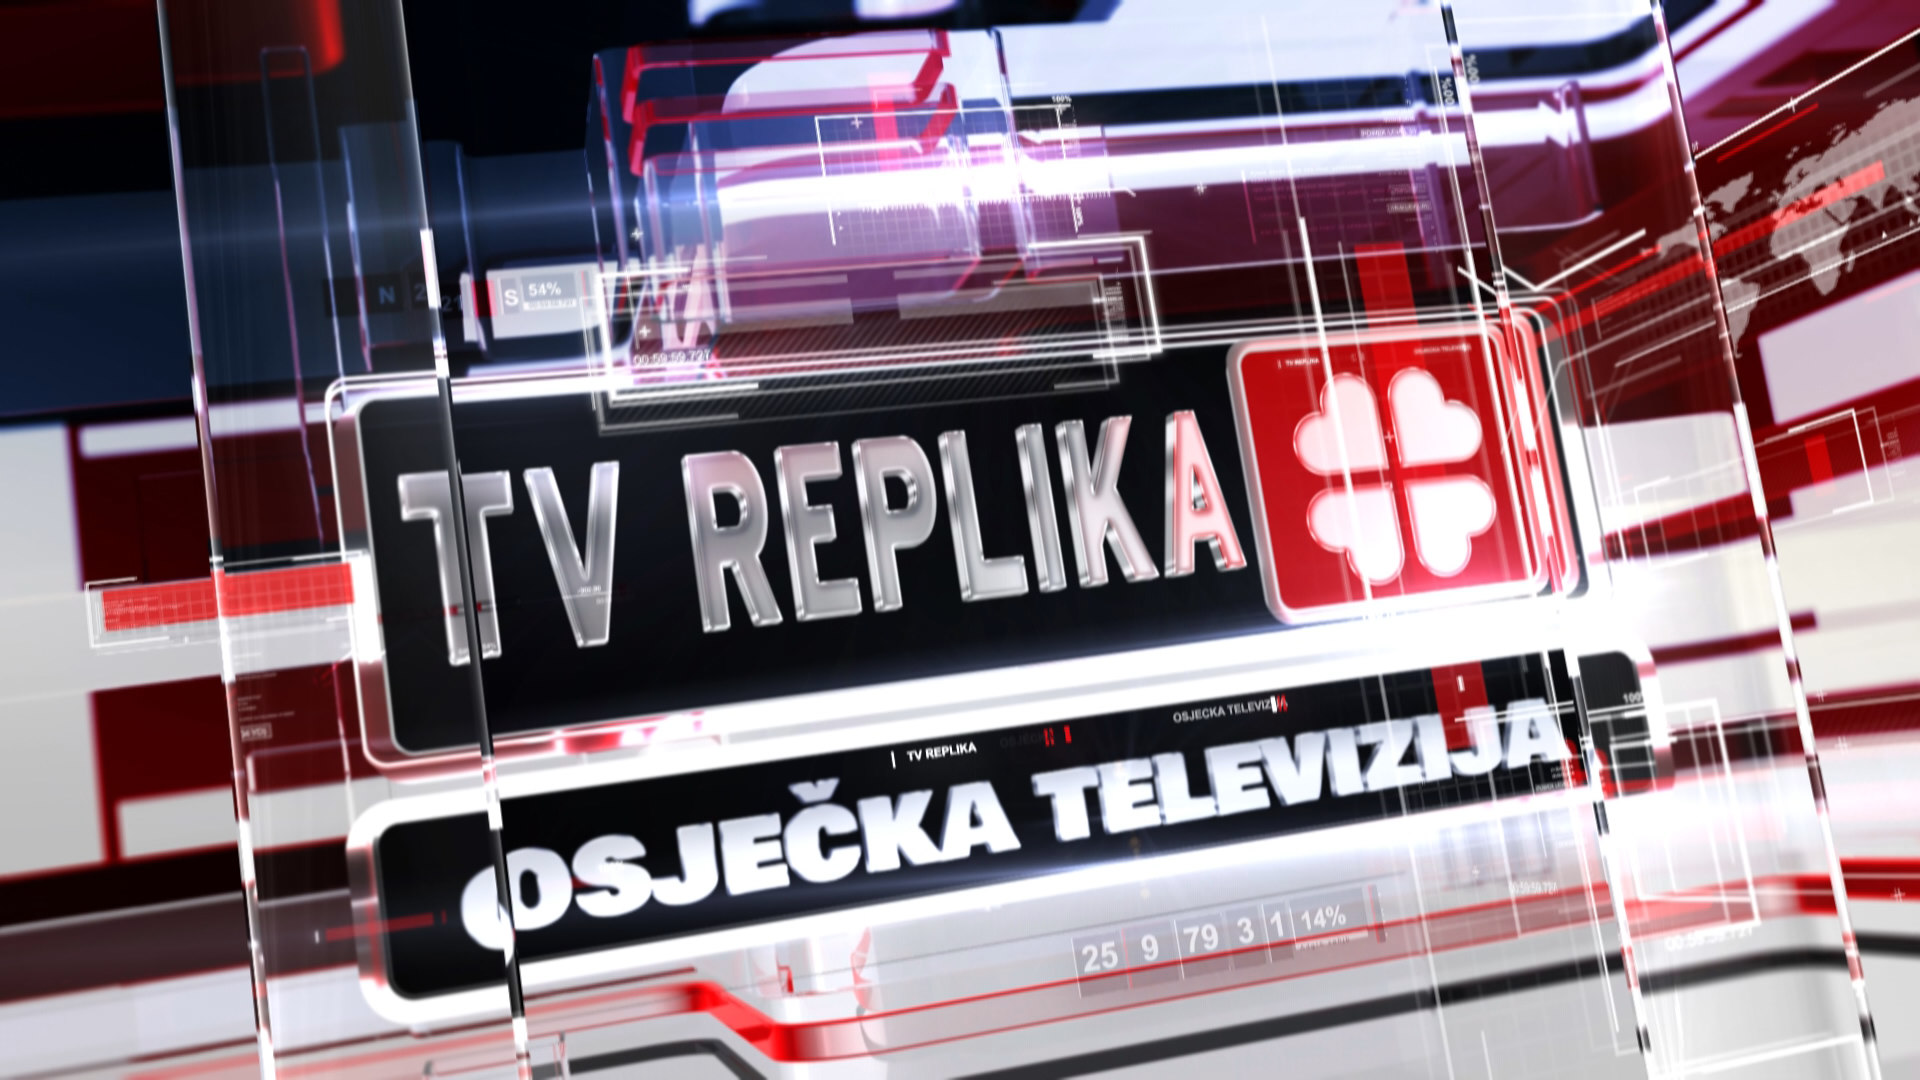 TV REPLIKA.bmp